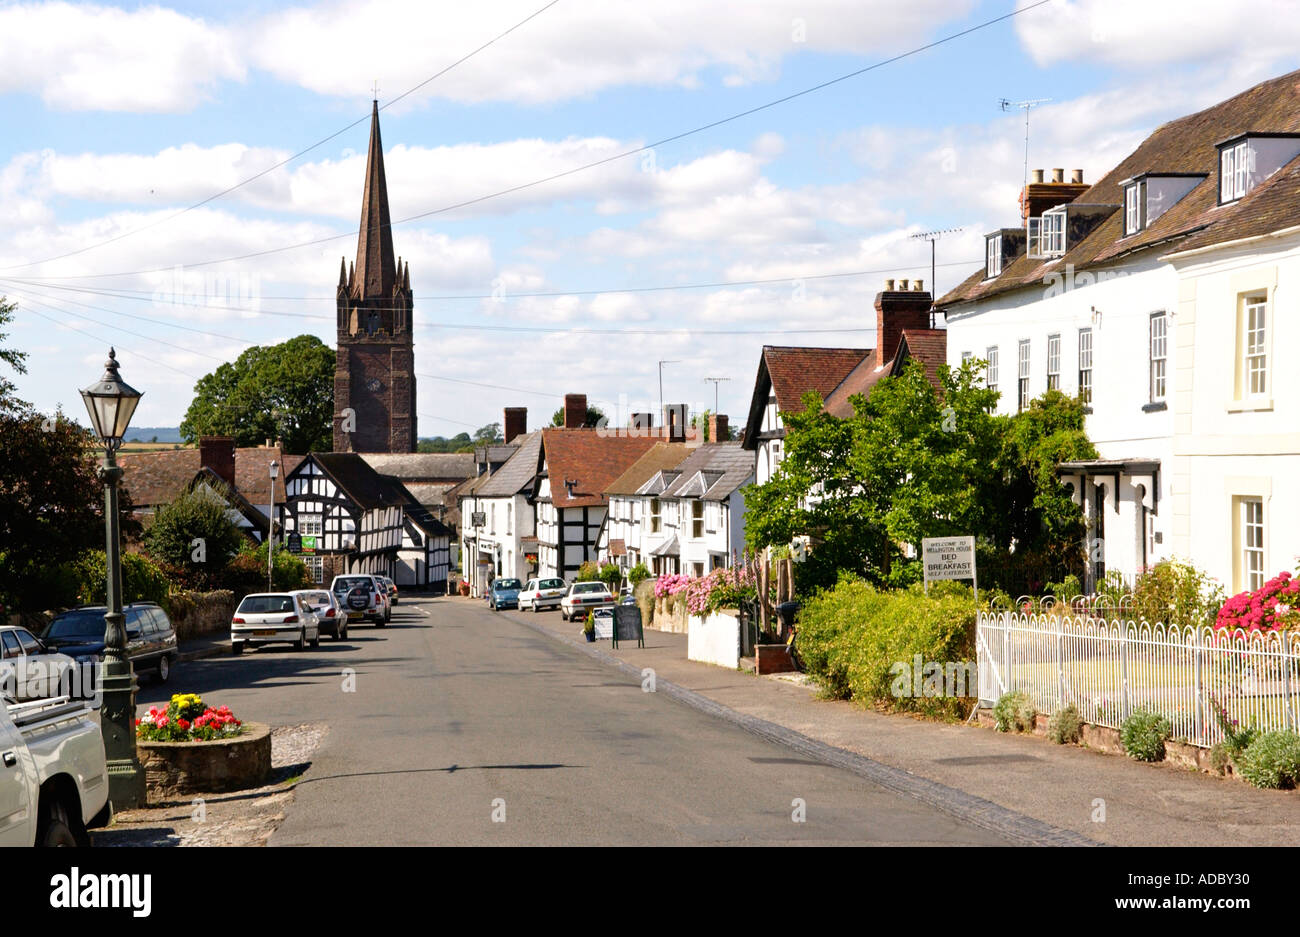 Englisches Dorf - Weobley Herefordshire England UK Blick hinunter Broad Street in Richtung der Kirche mit Turm Stockfoto